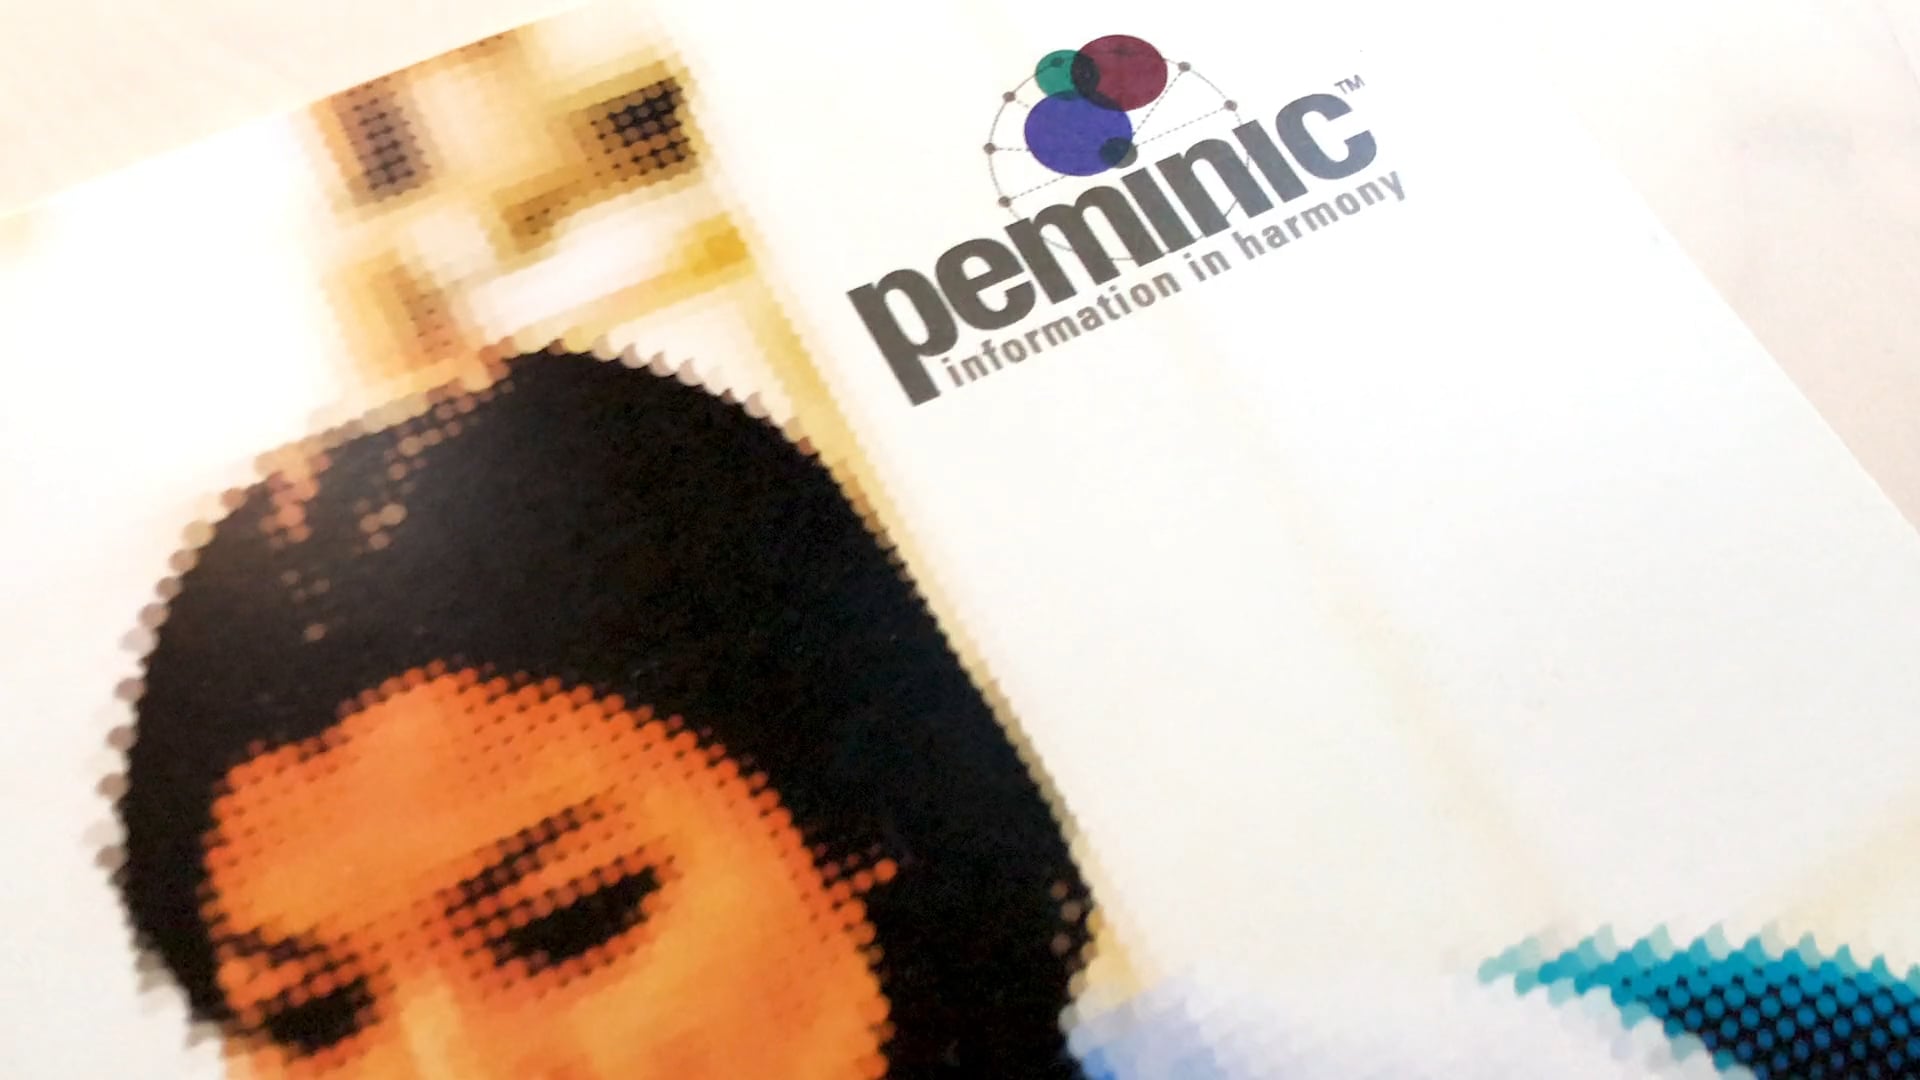 Brochure Branding - Peminic